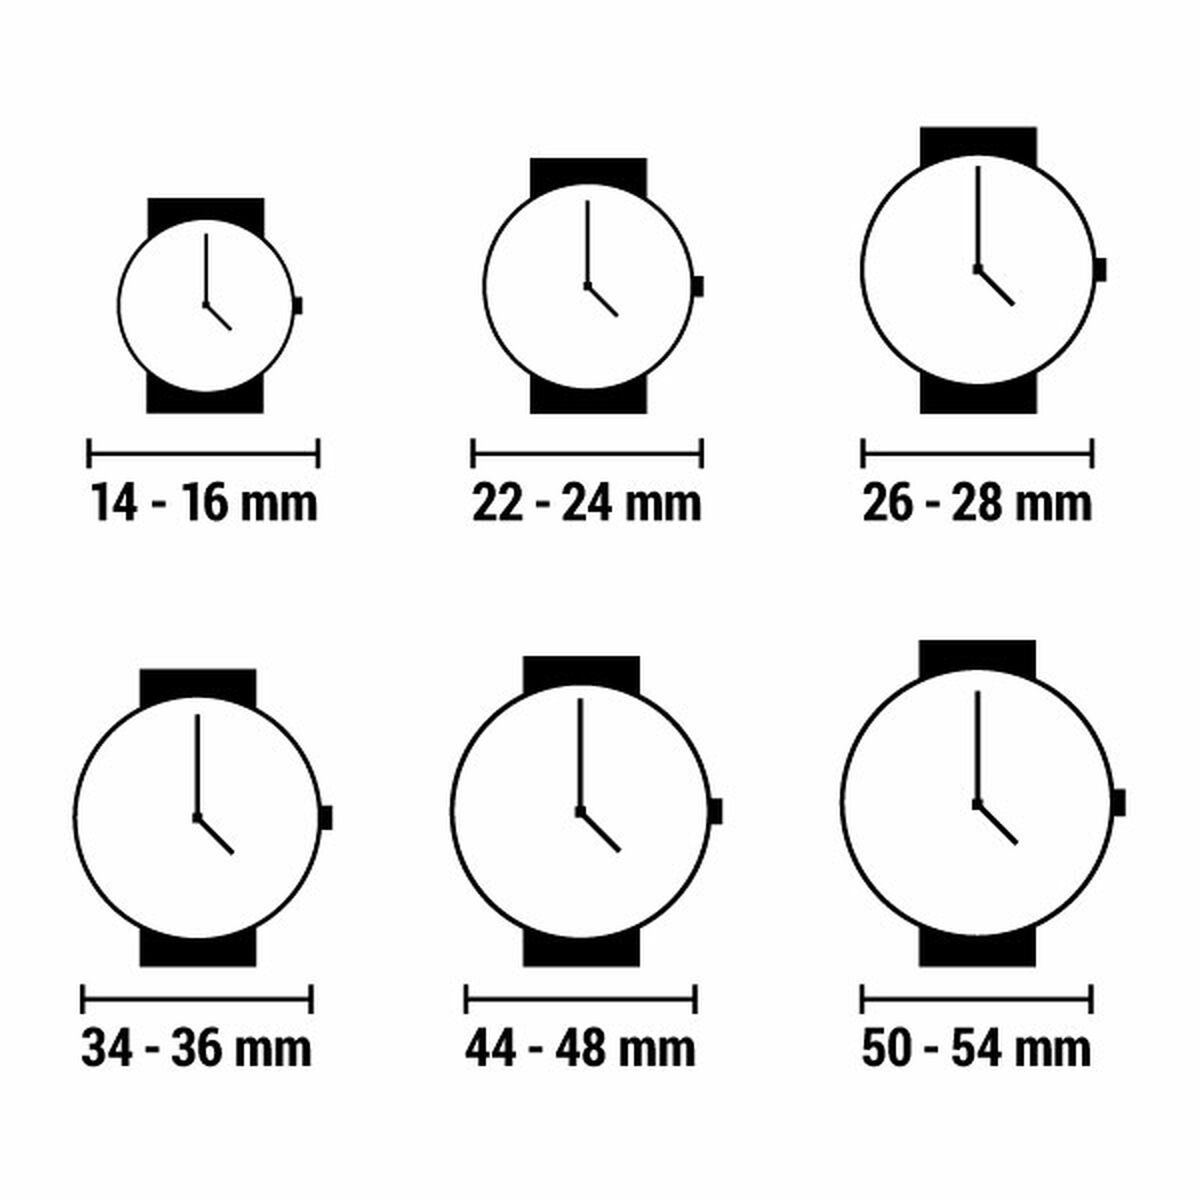 Unisex Watch MAM 645 (Ø 39 mm)